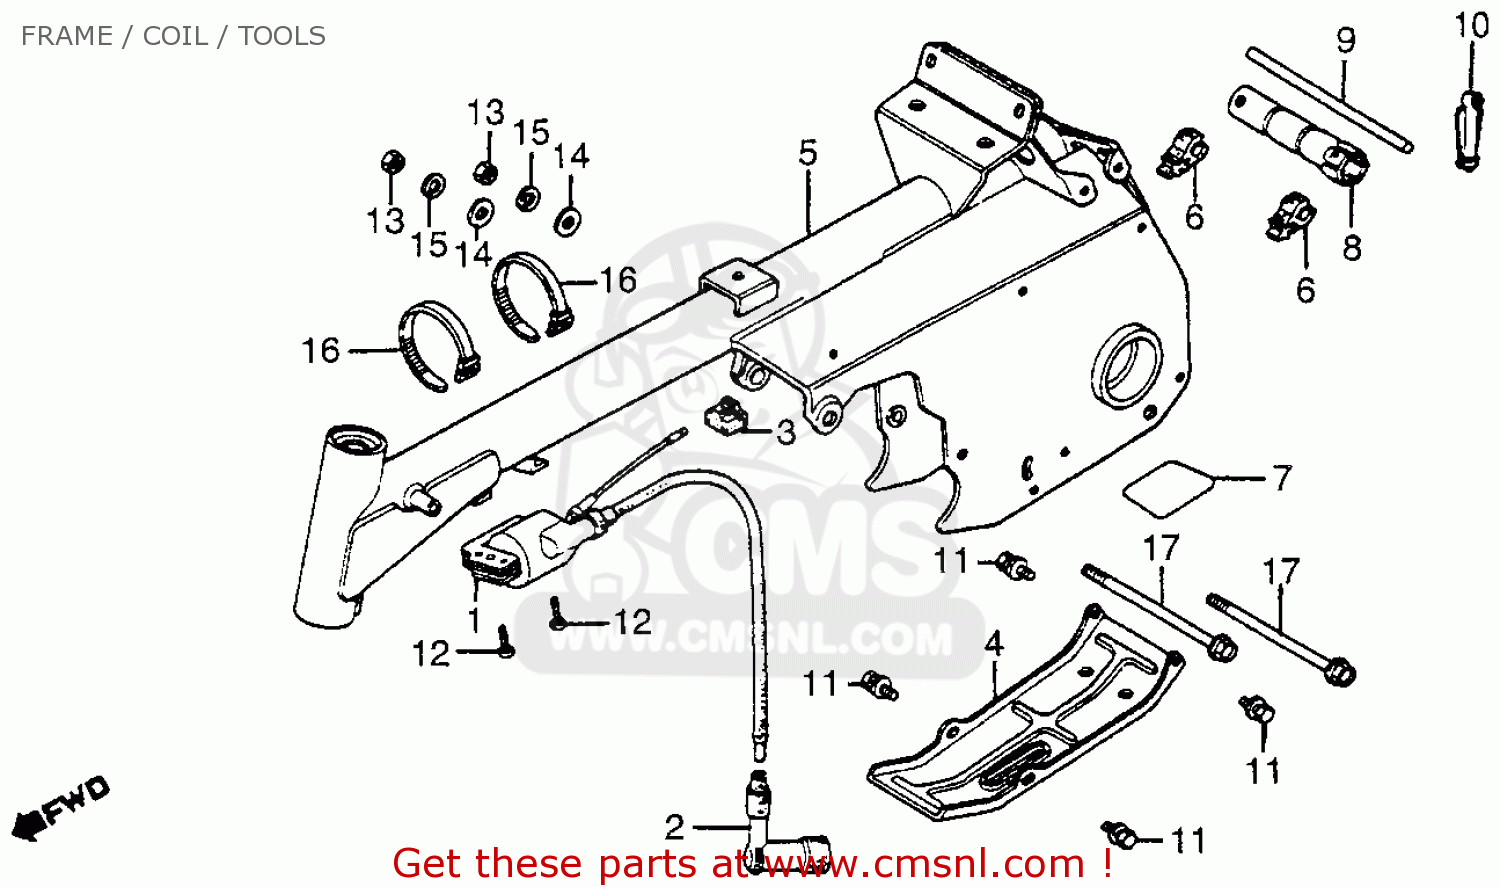 Honda atc 70 parts list #4